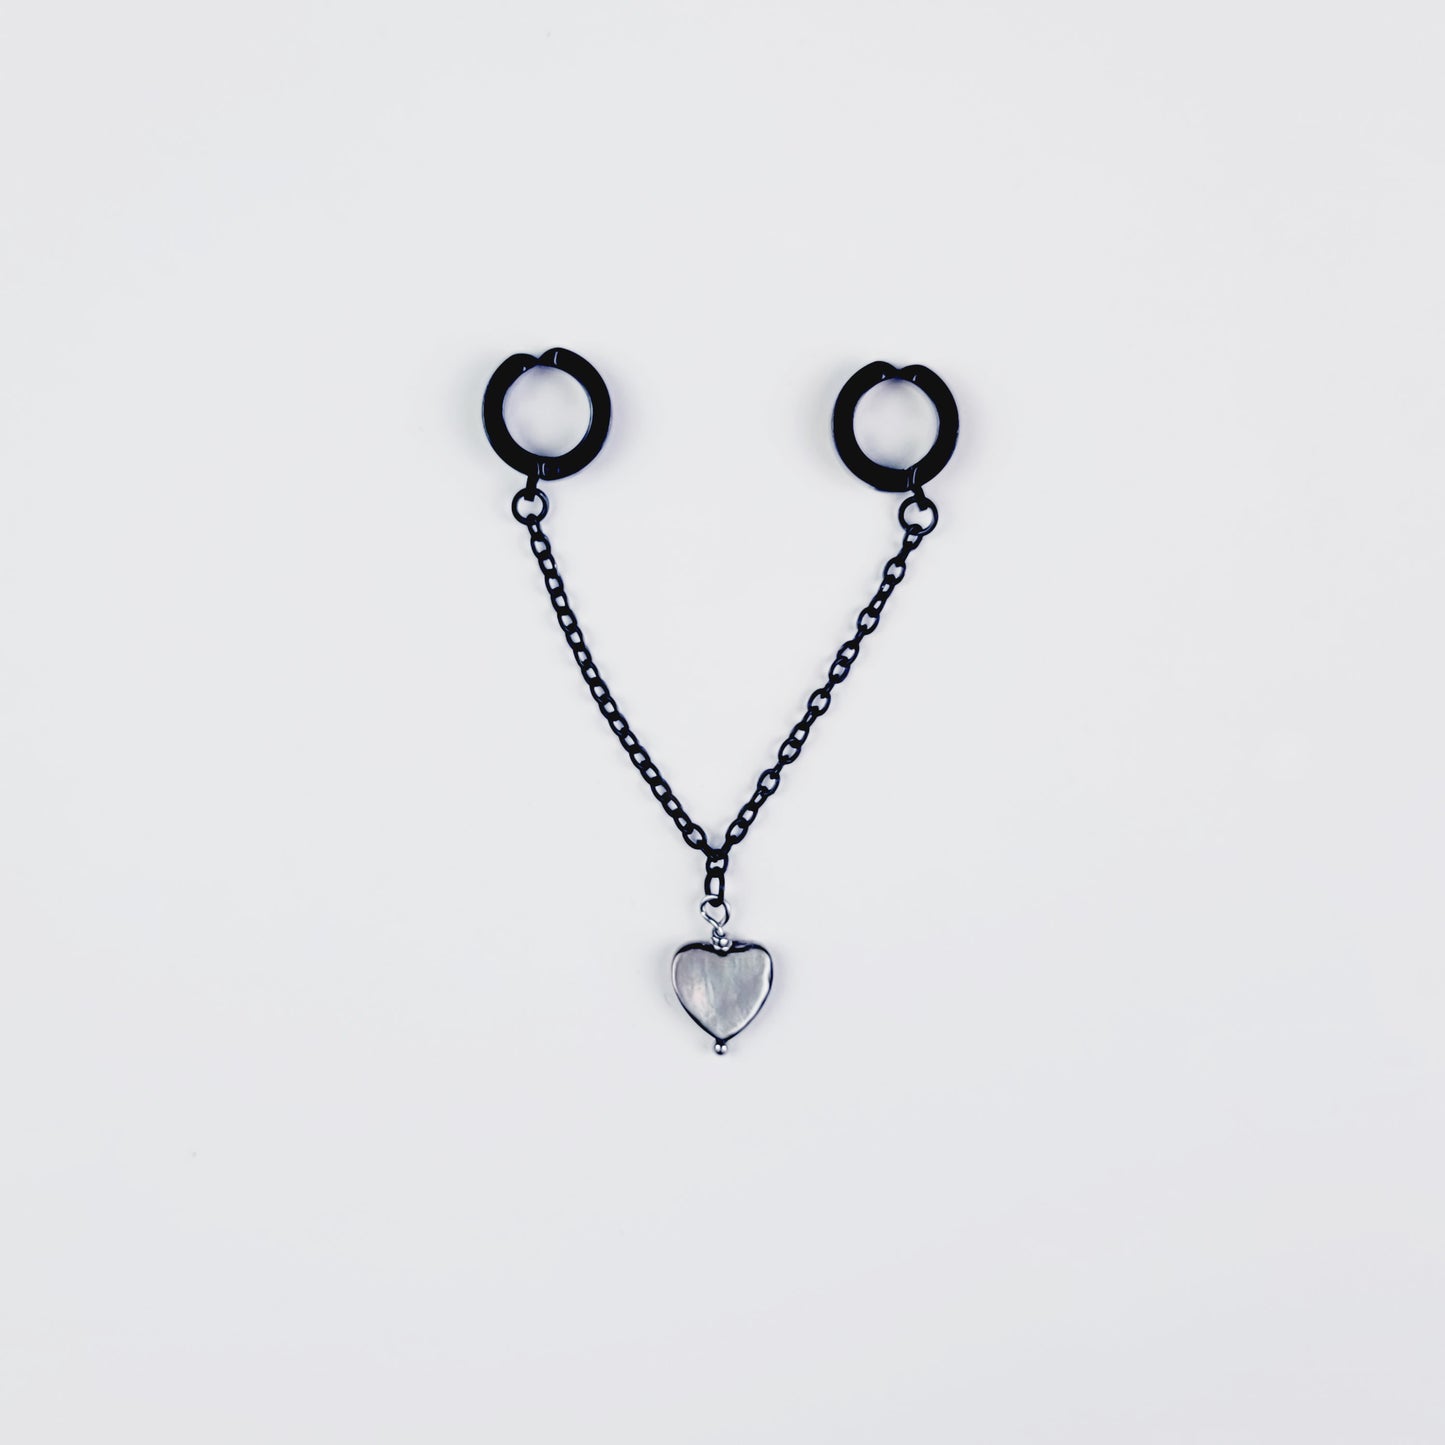 Labia Chain Dangle, Non Piercing, Black with Shell Heart.